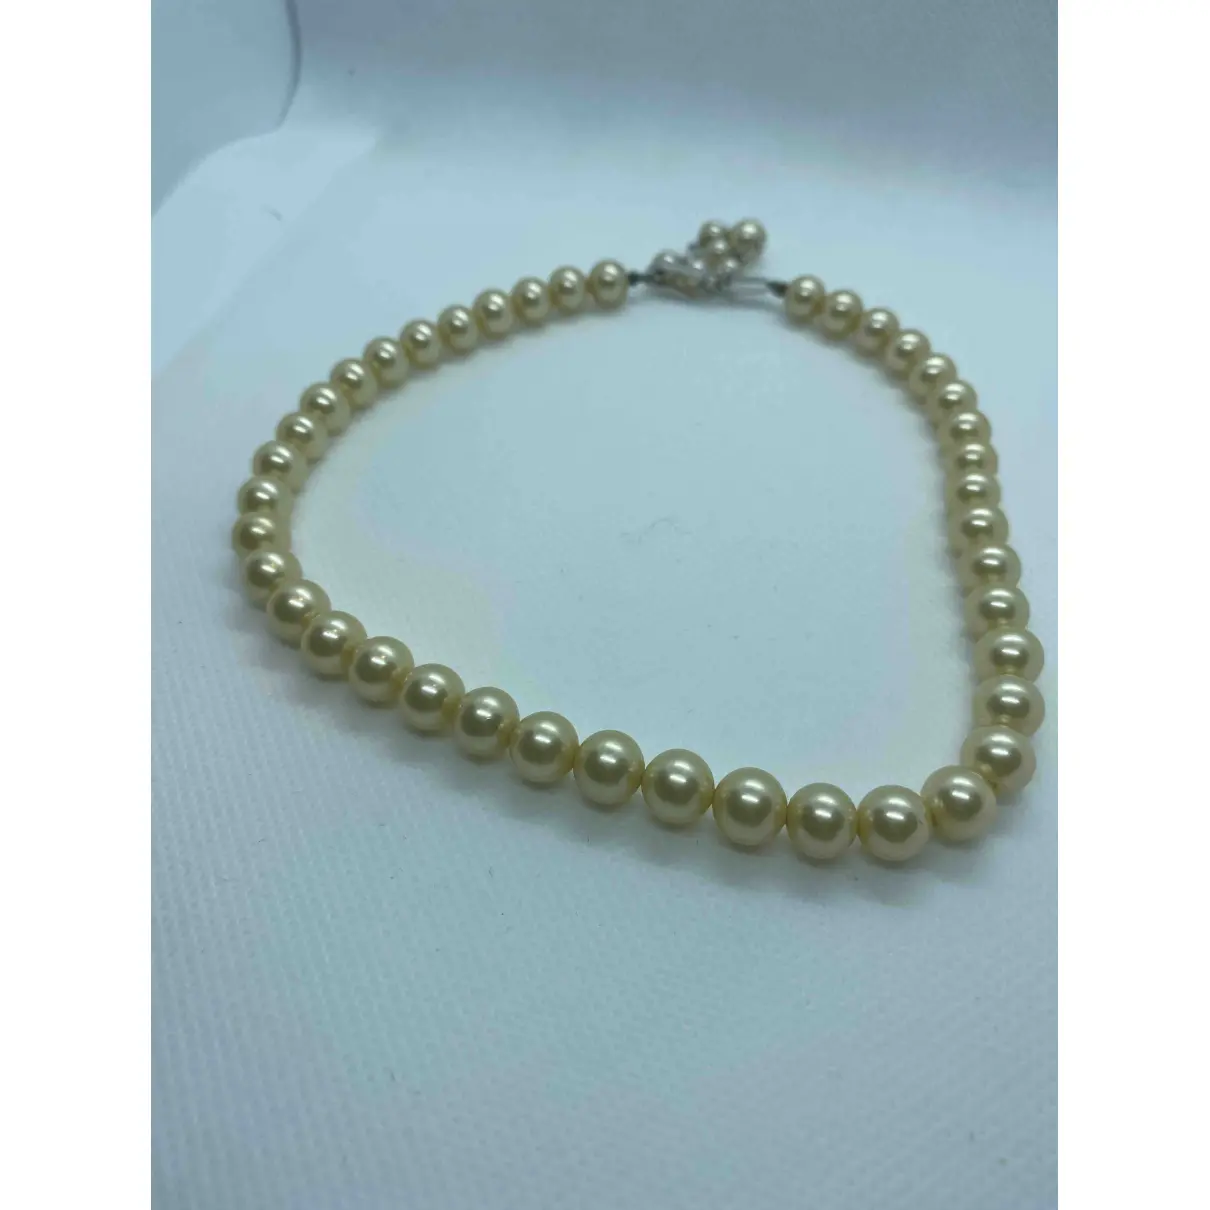 Buy Trifari Pearls necklace online